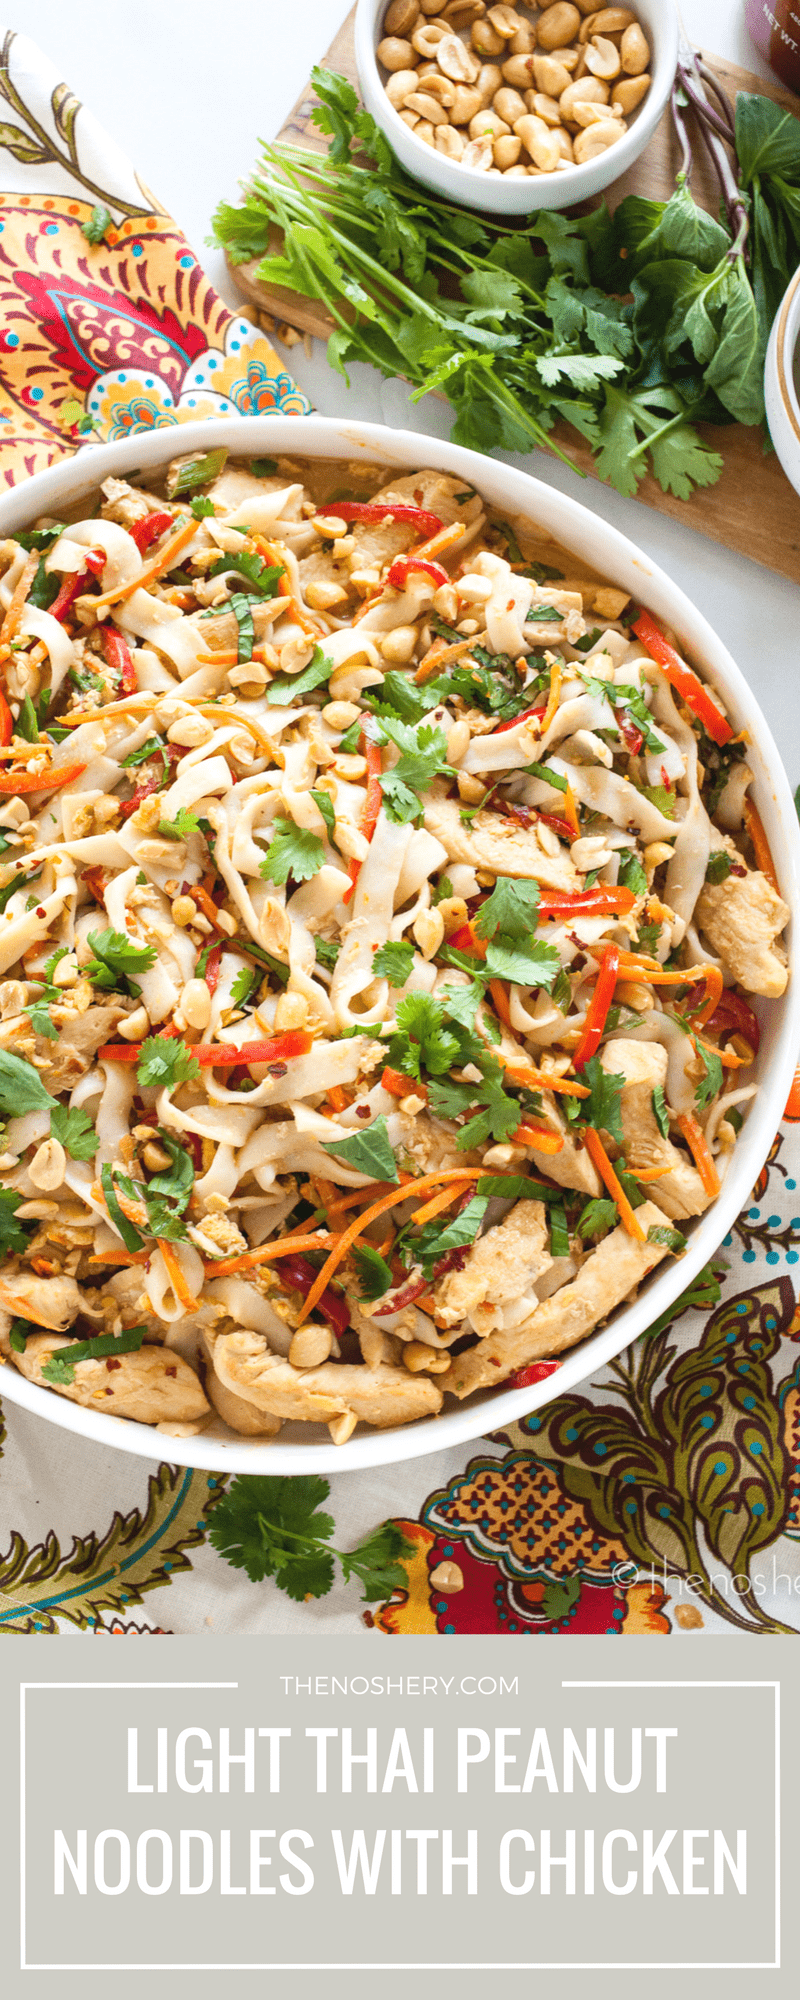 Spicy Thai Peanut Noodles with Chicken - The Noshery